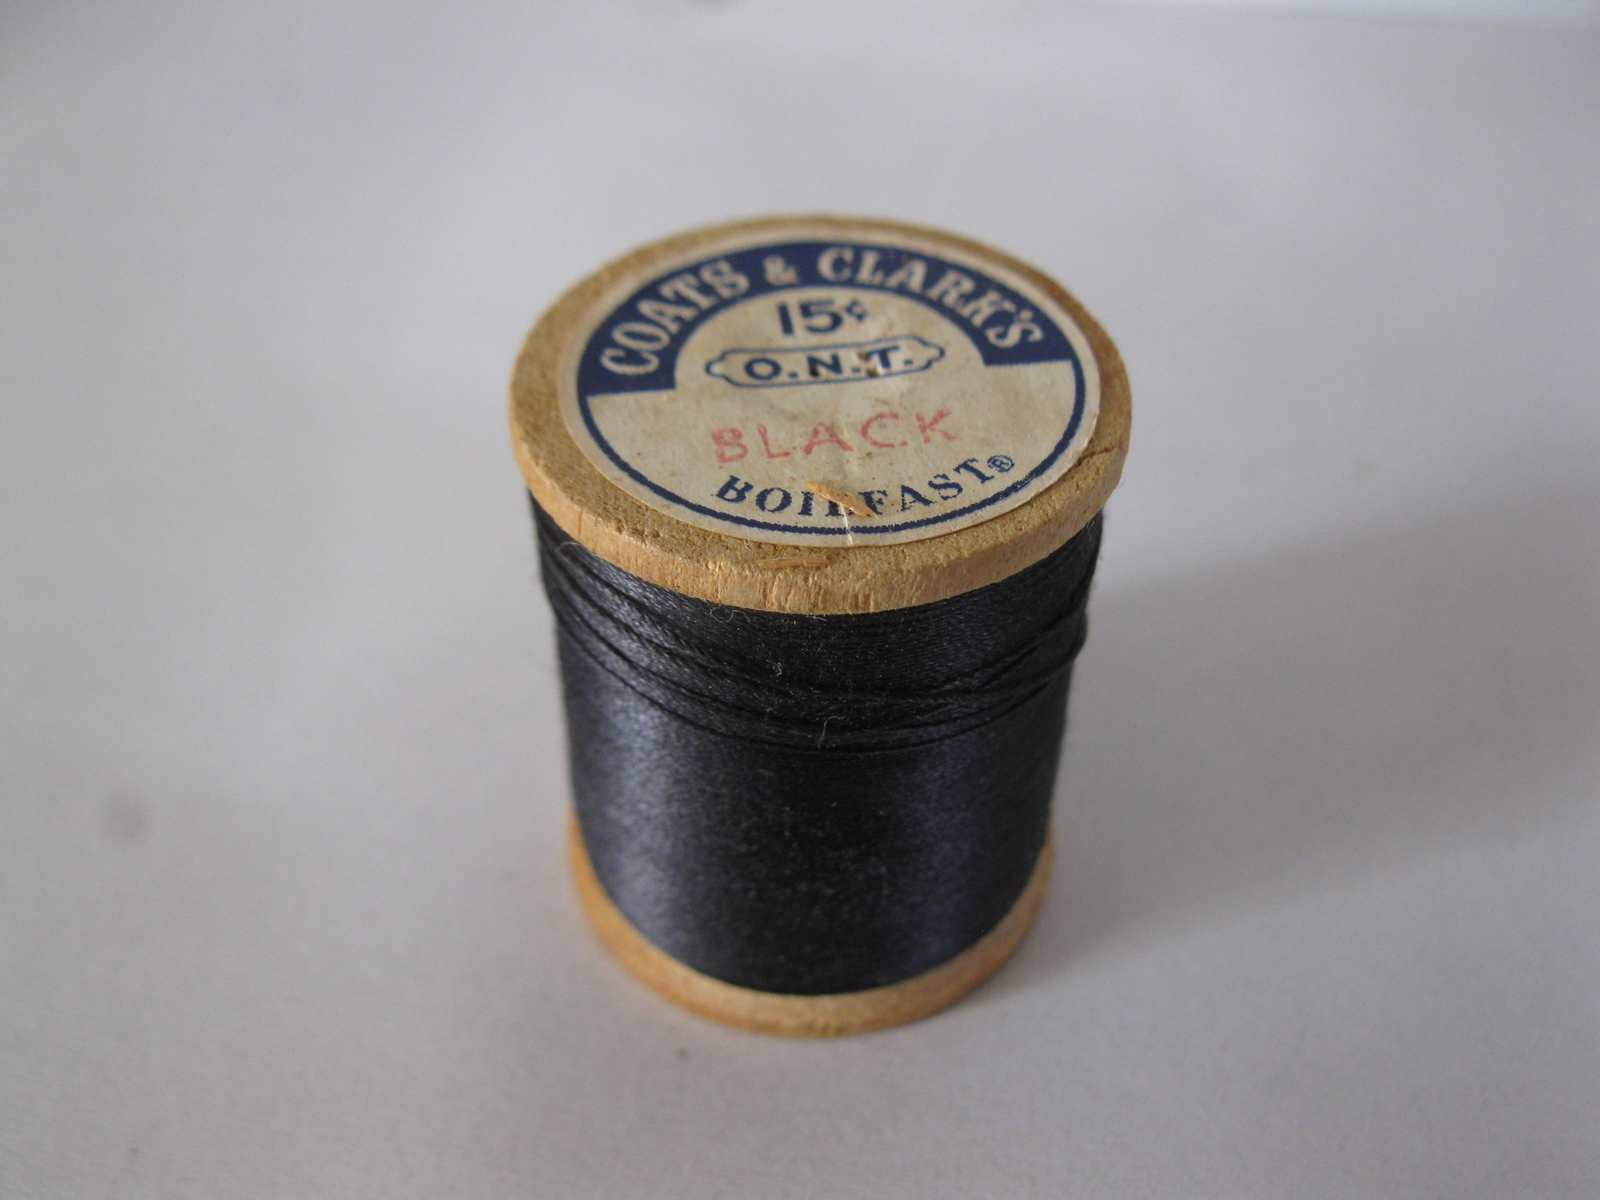 #21 old wood Spool w/ Thread: Coat's & Clark's Boilfast - Black - $2.00